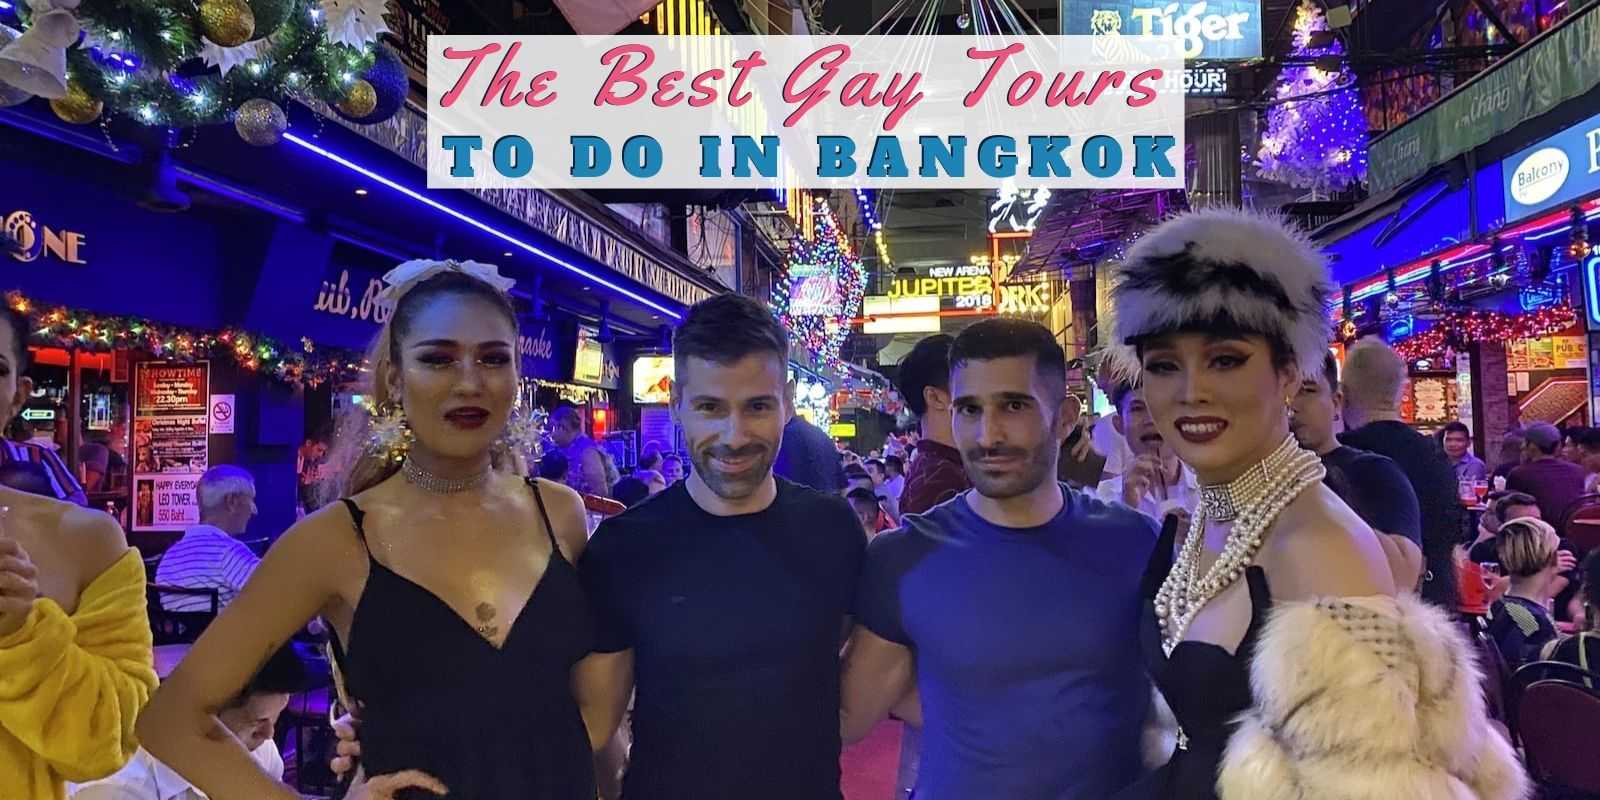 gay cruise bangkok